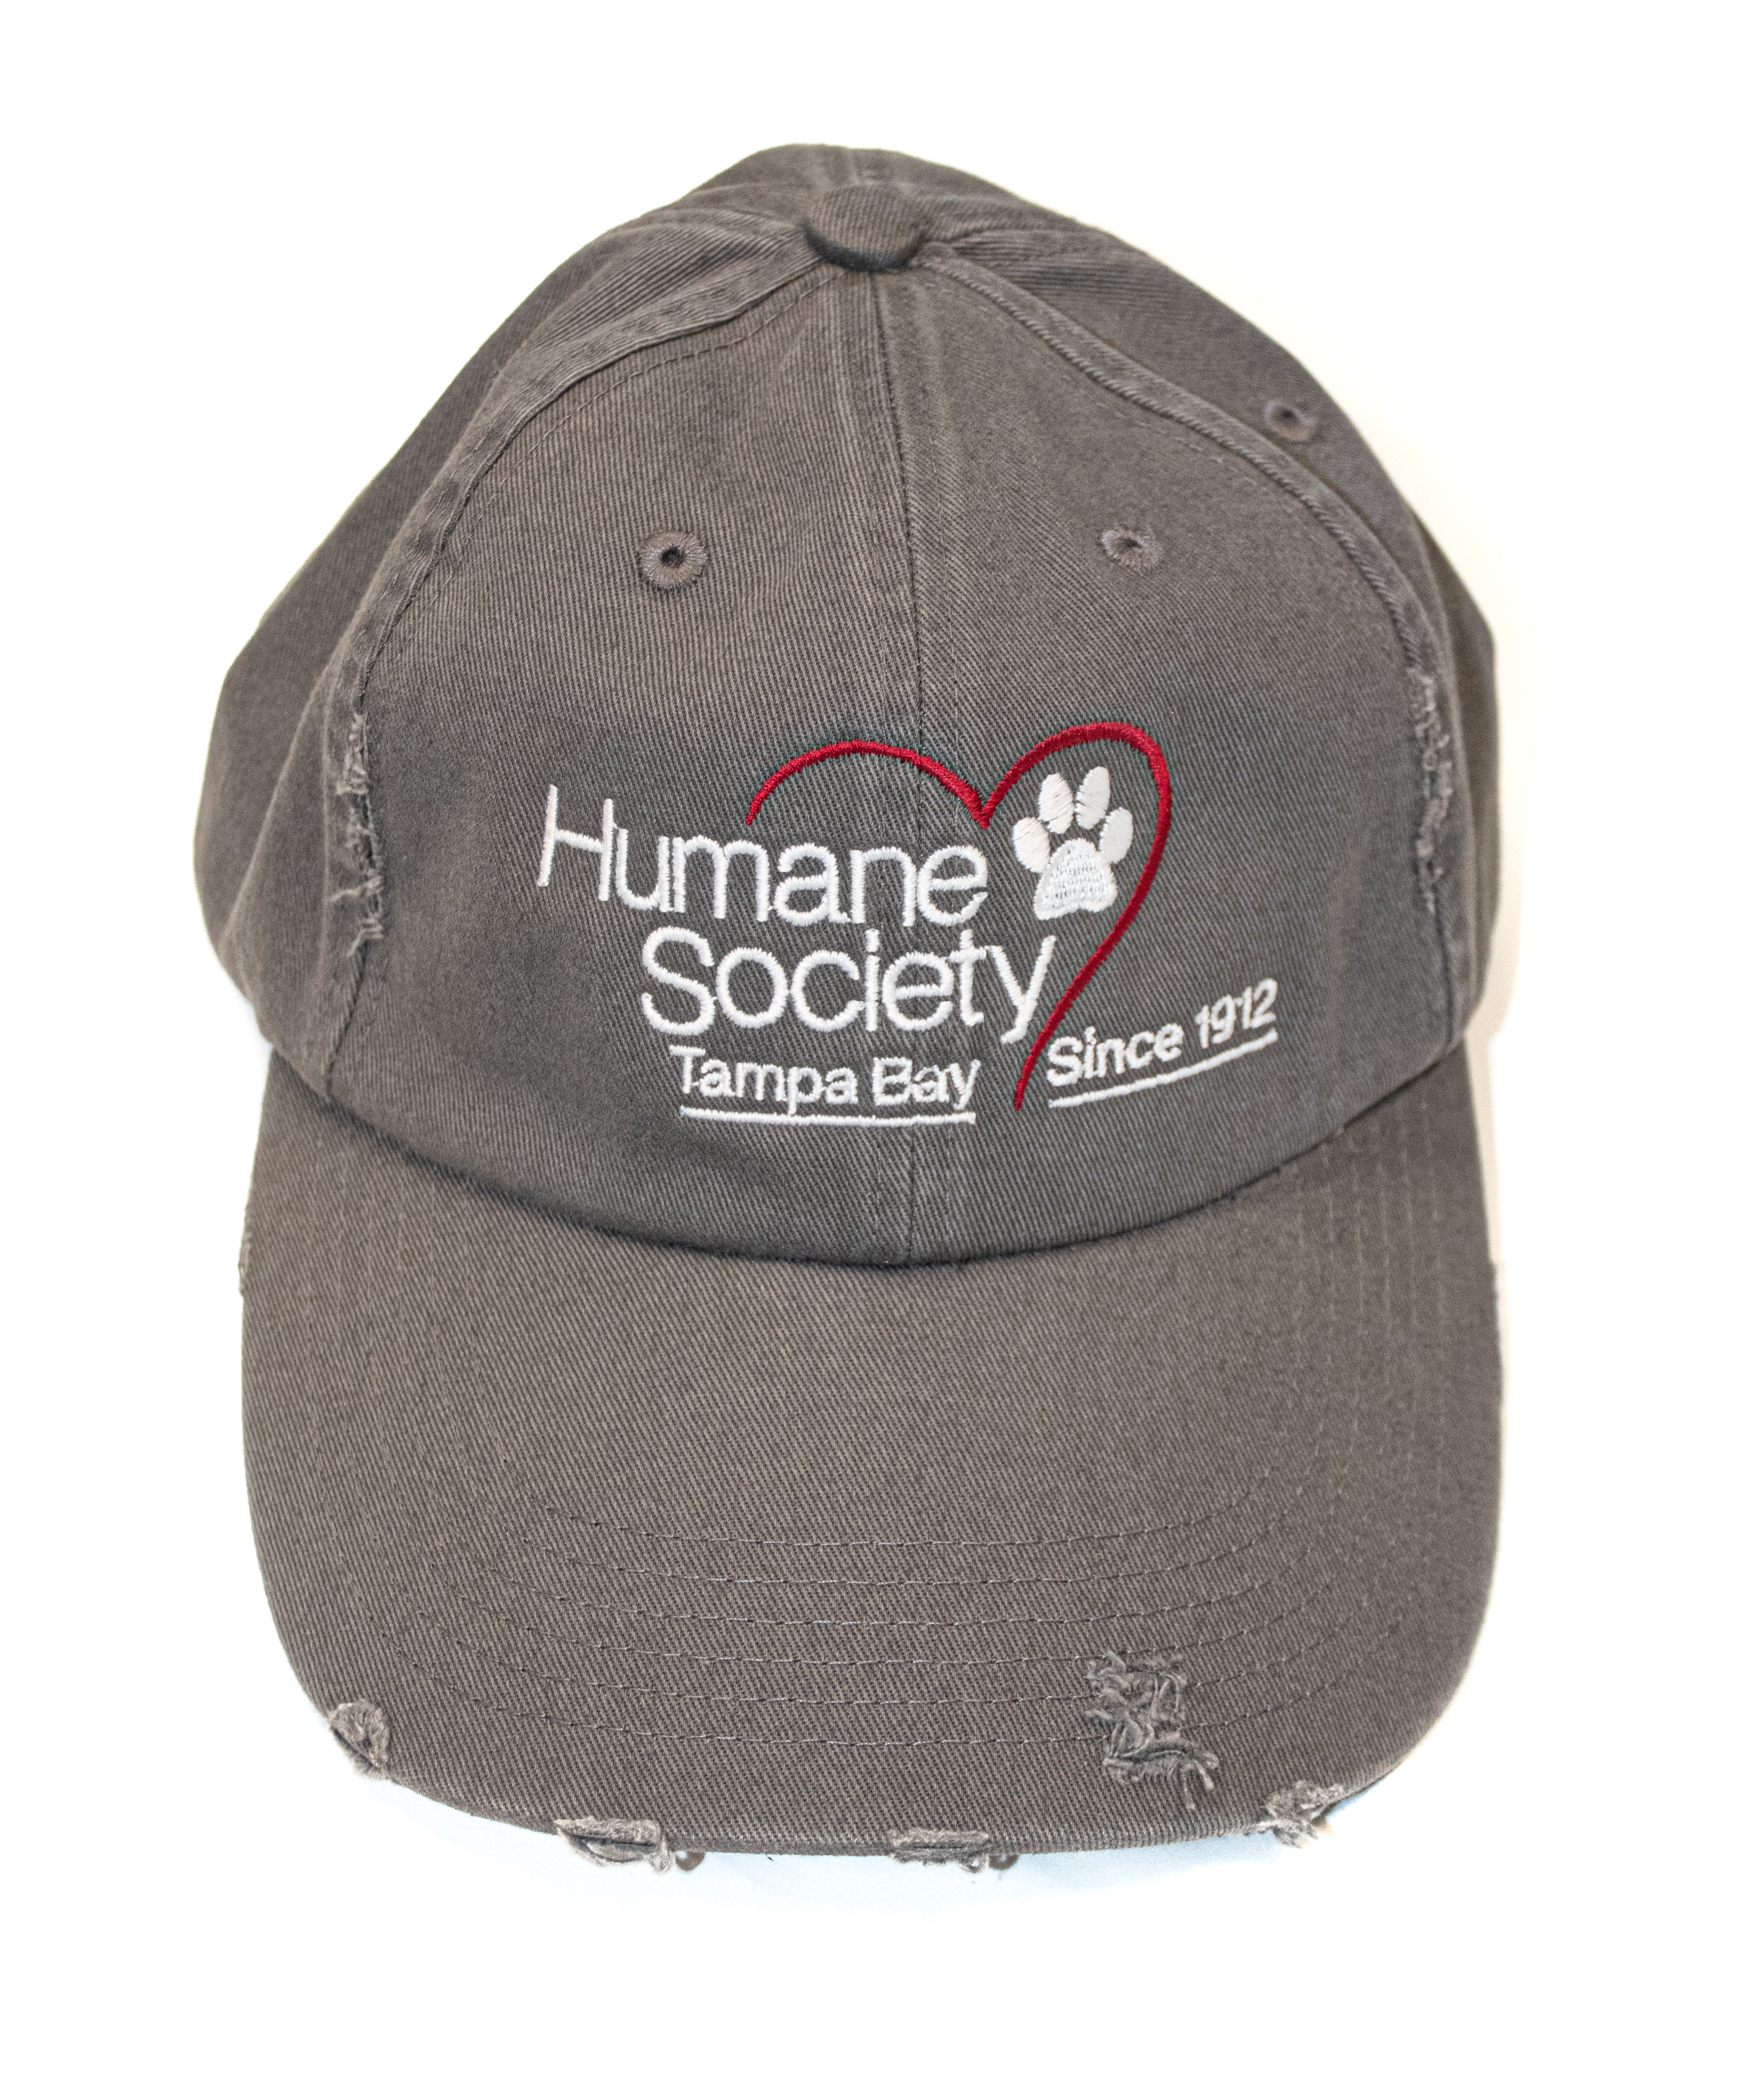 Uncategorized Archives - Humane Society of Tampa Bay